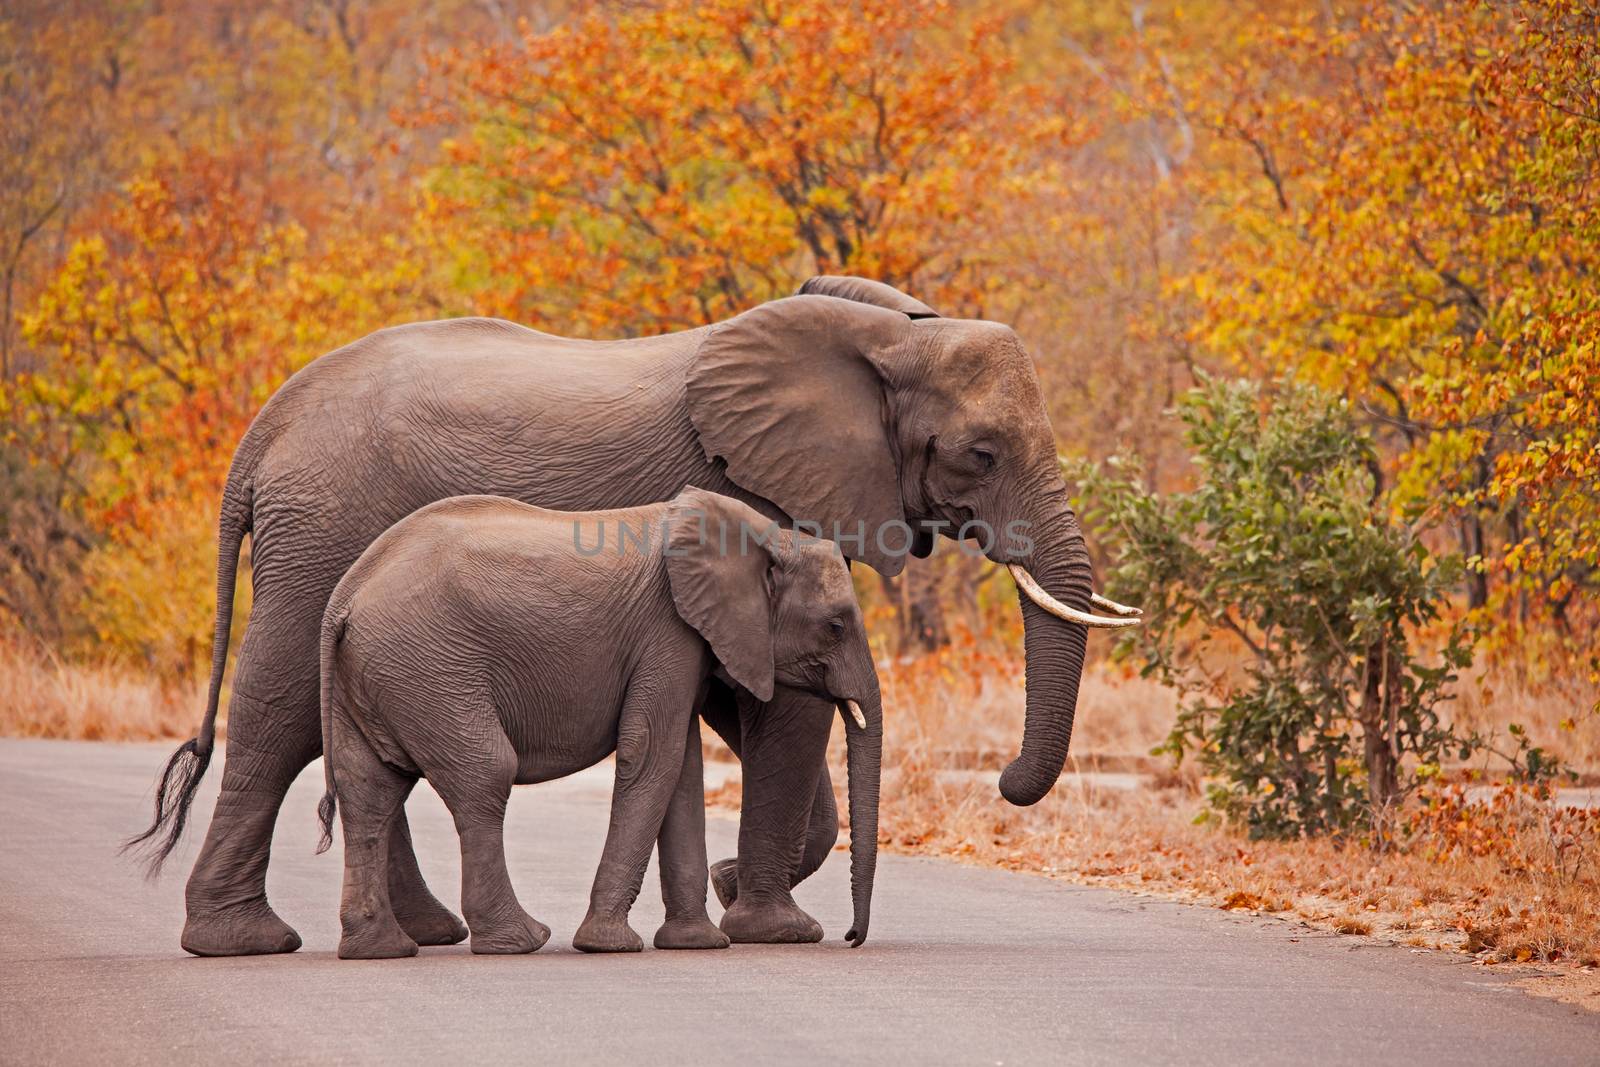 Elephants crossing by kobus_peche